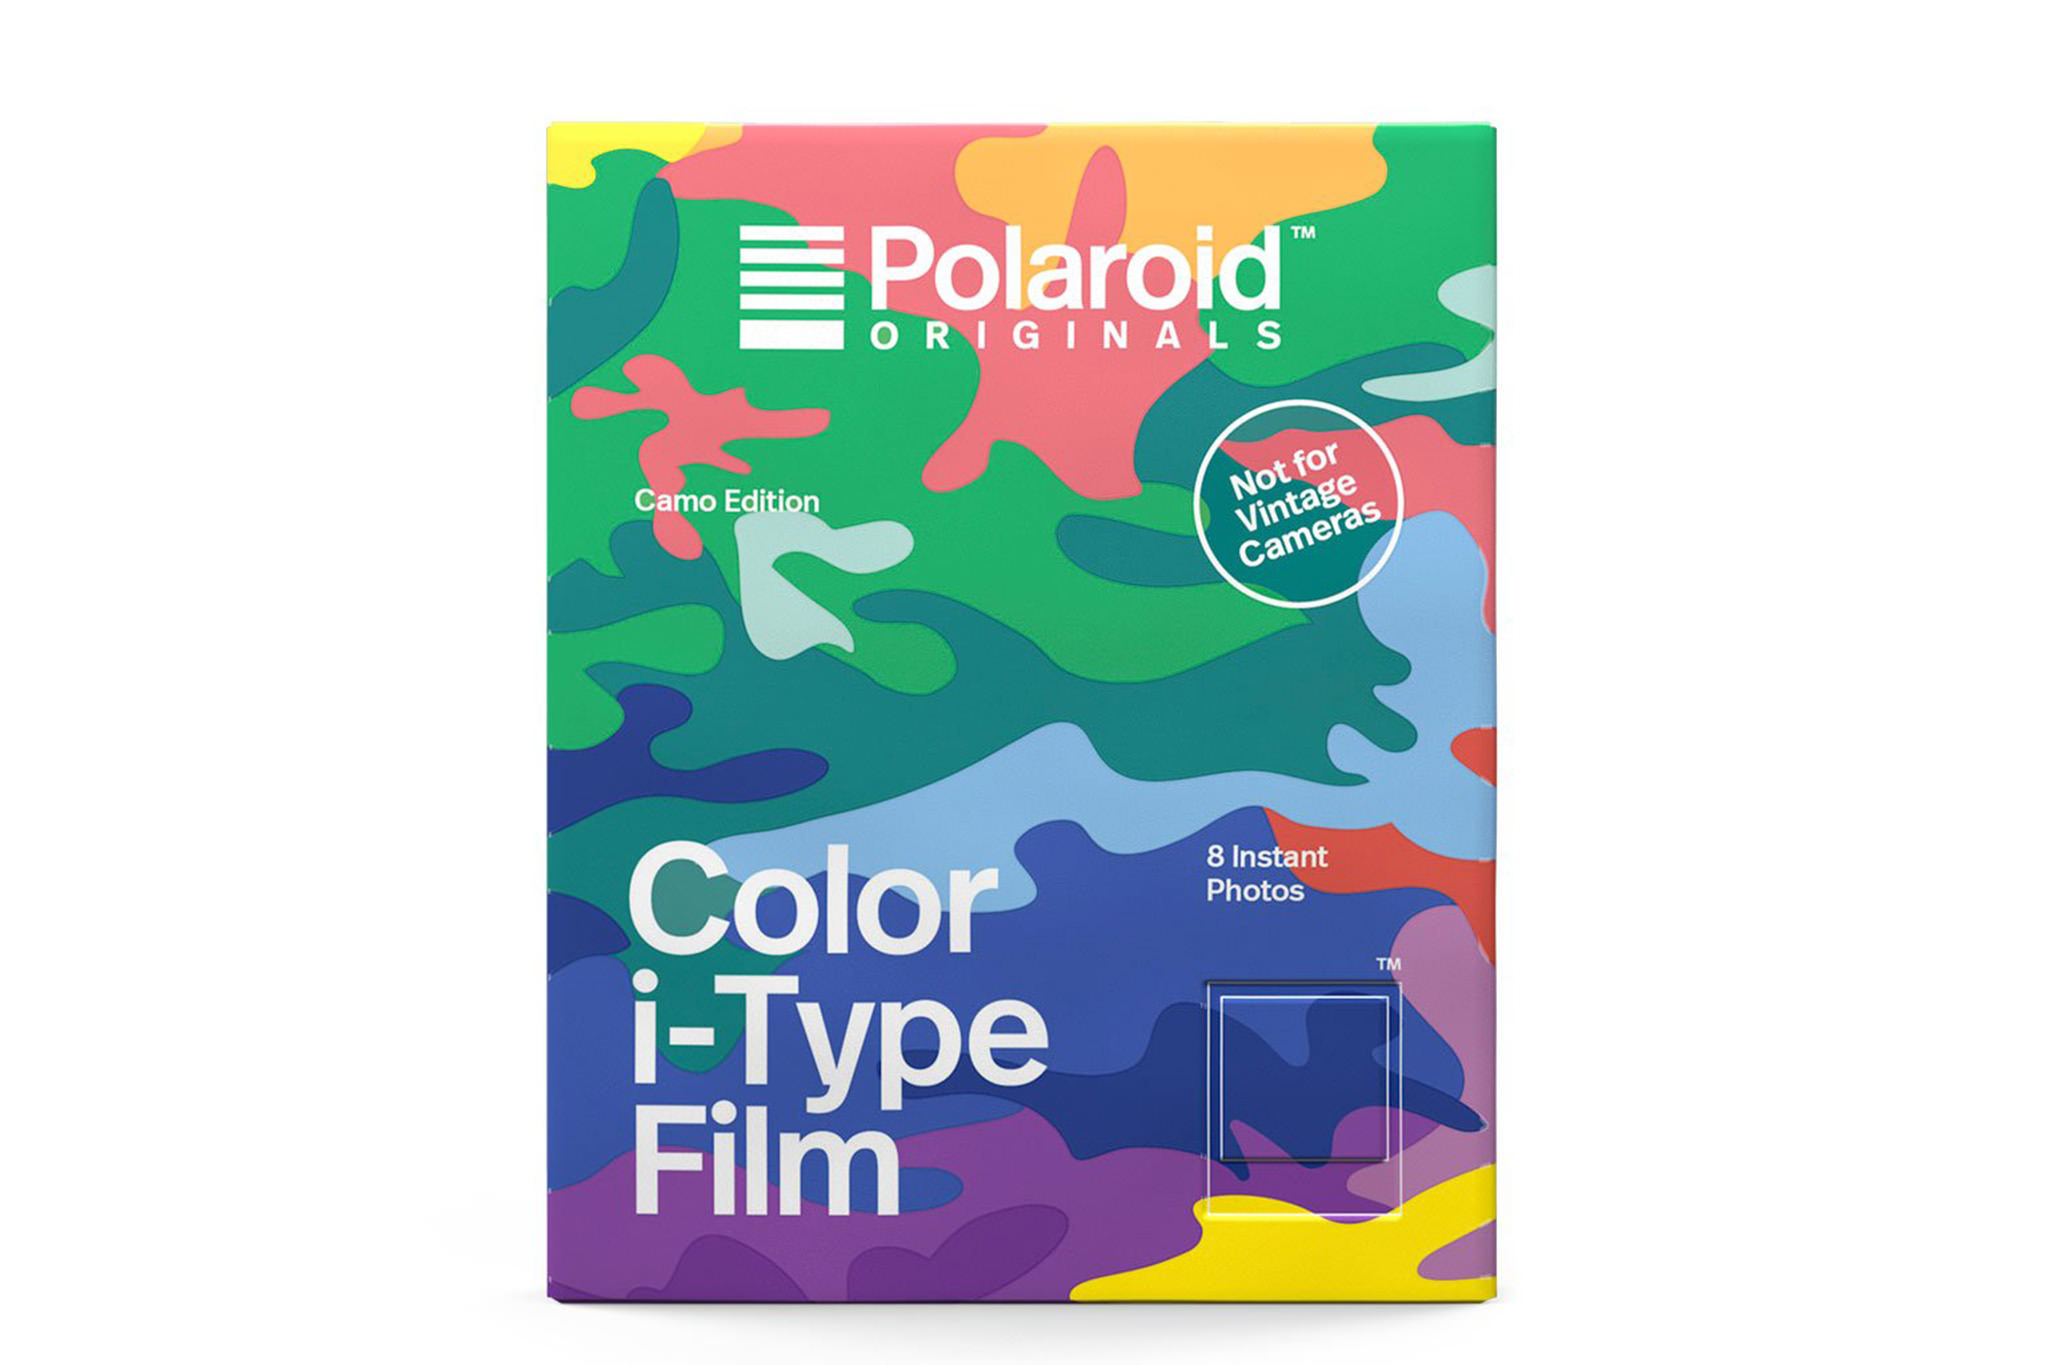 polaroid-originals-color-i-type-film-camo-edition